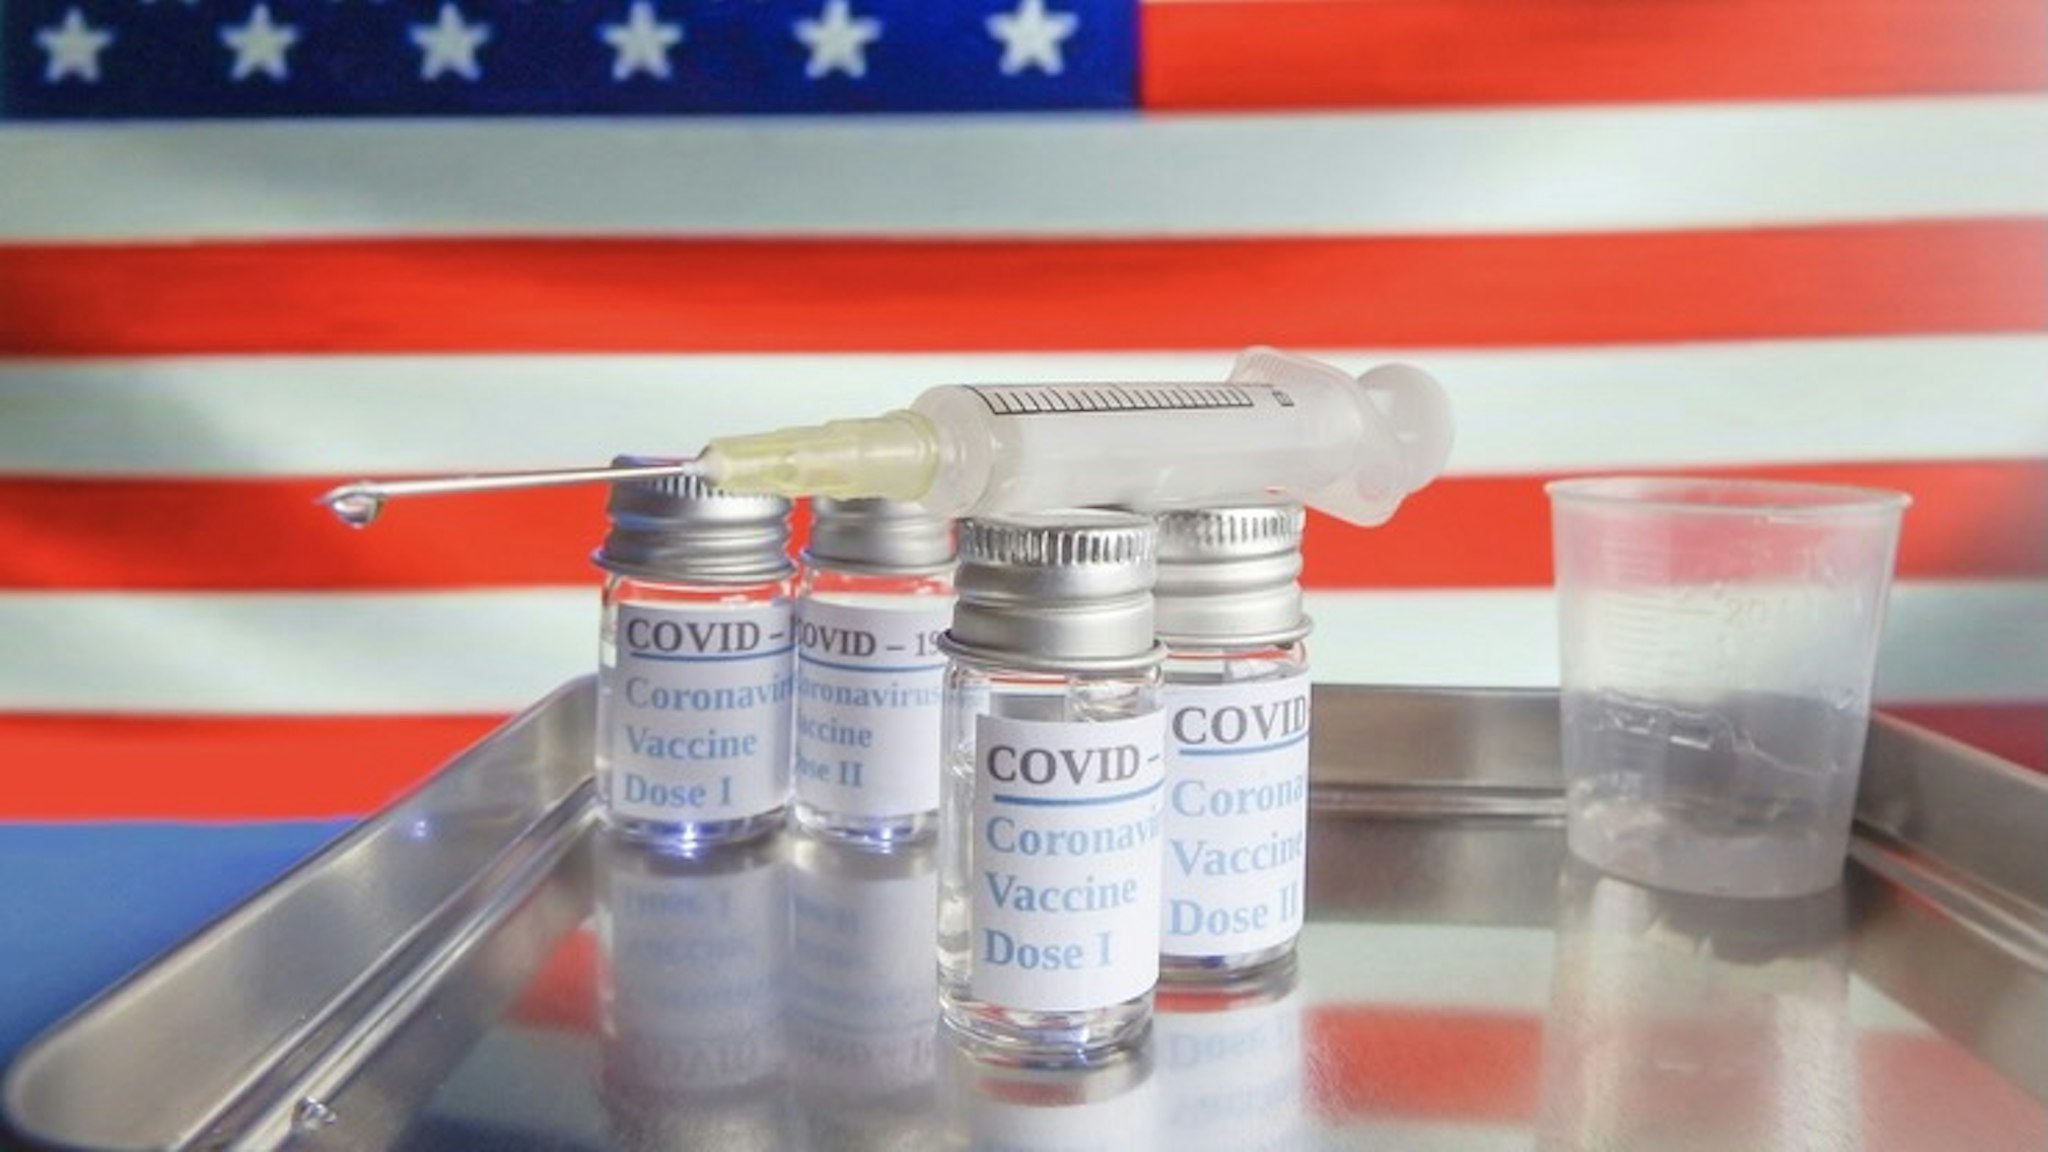 Covid 19 vaccine - stock photo Covid 19 vaccine and United States flag